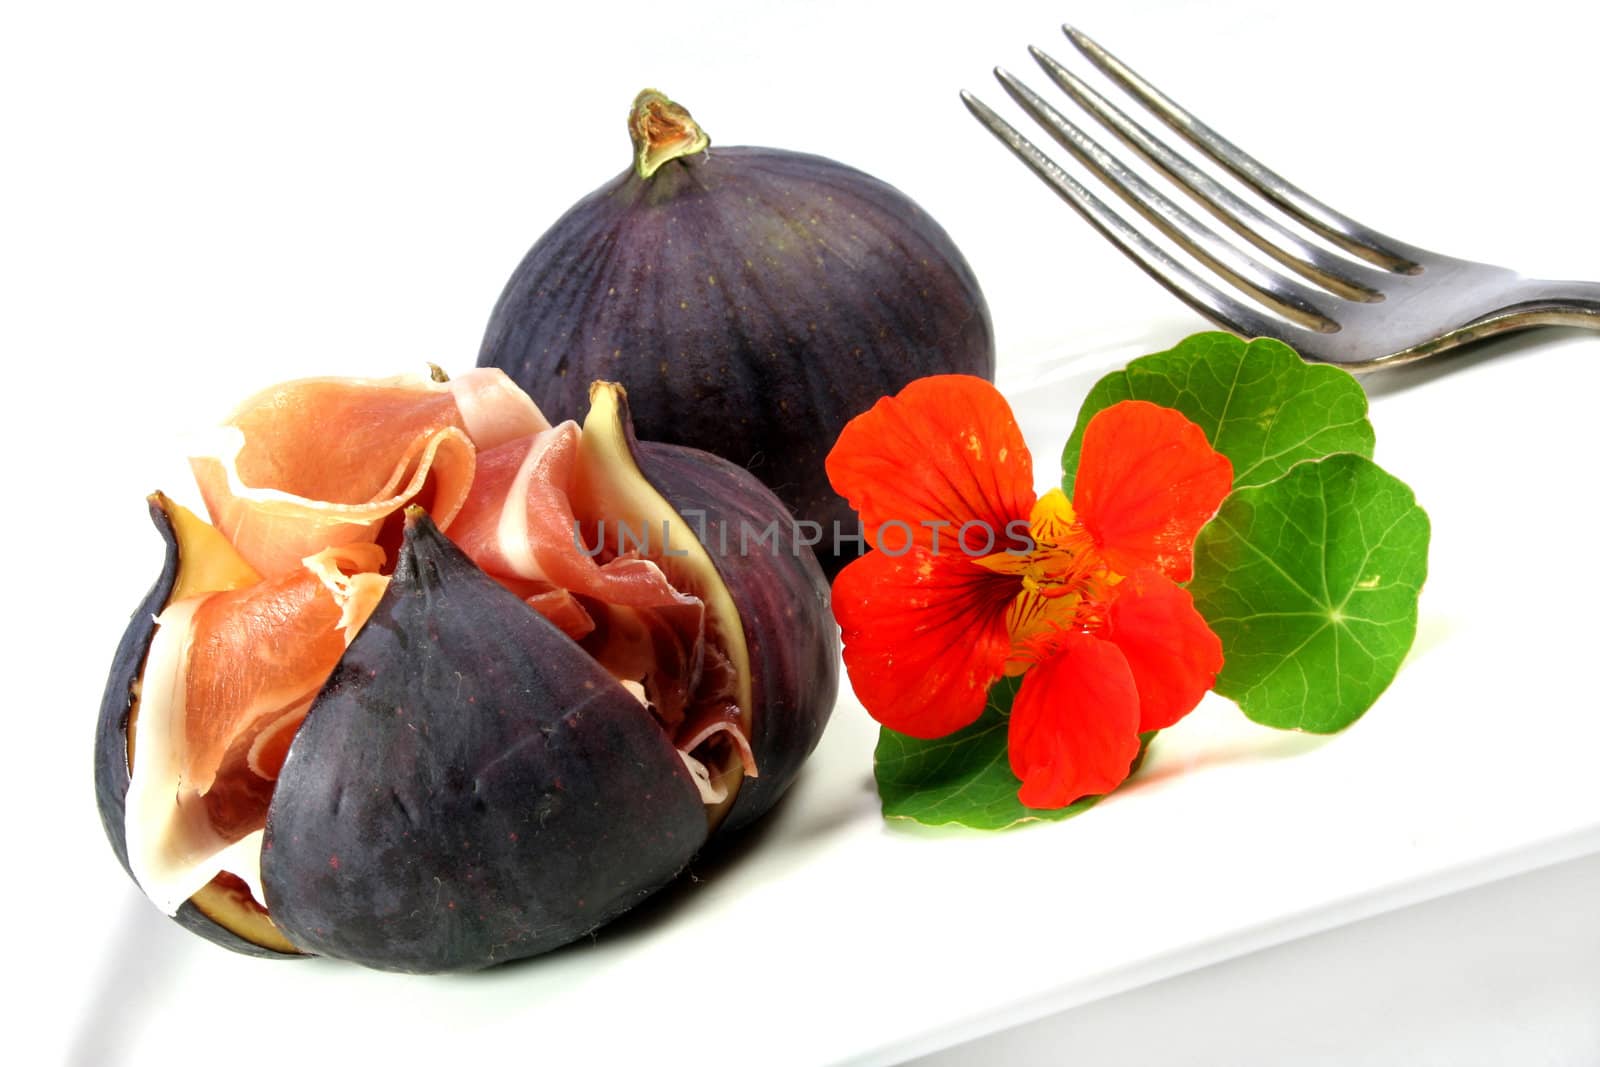 Figs with Serrano ham and nasturtiums